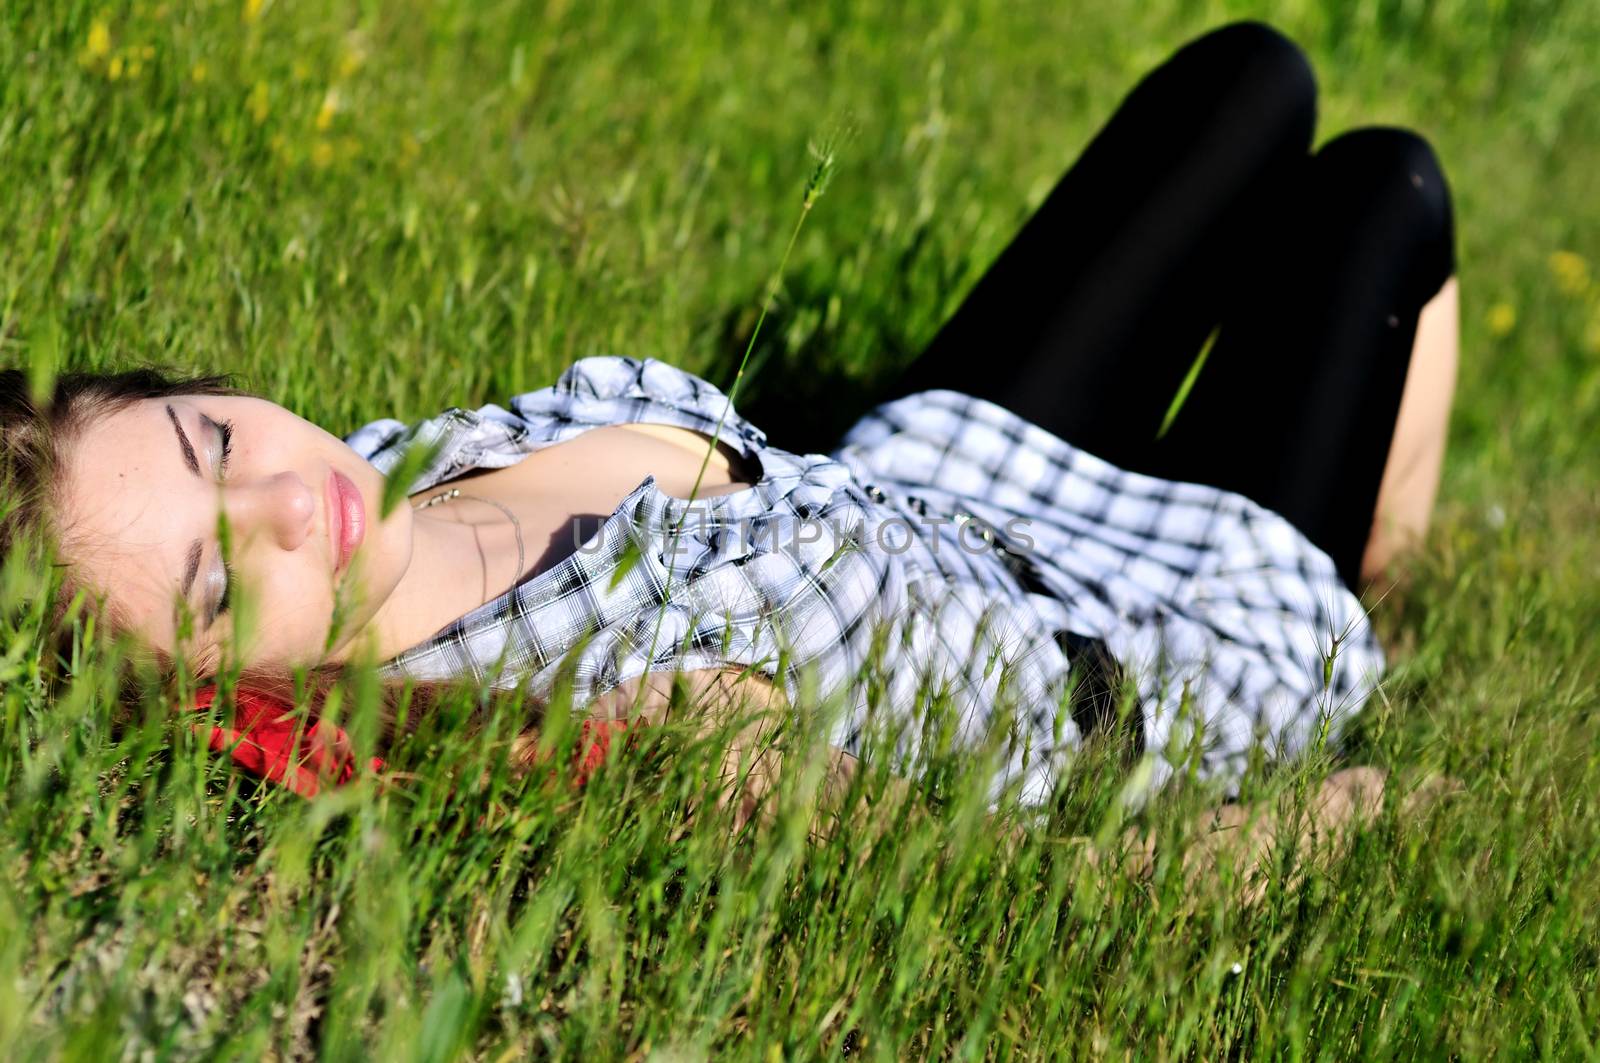 sweet tender teen girl dreaming in the high grass 